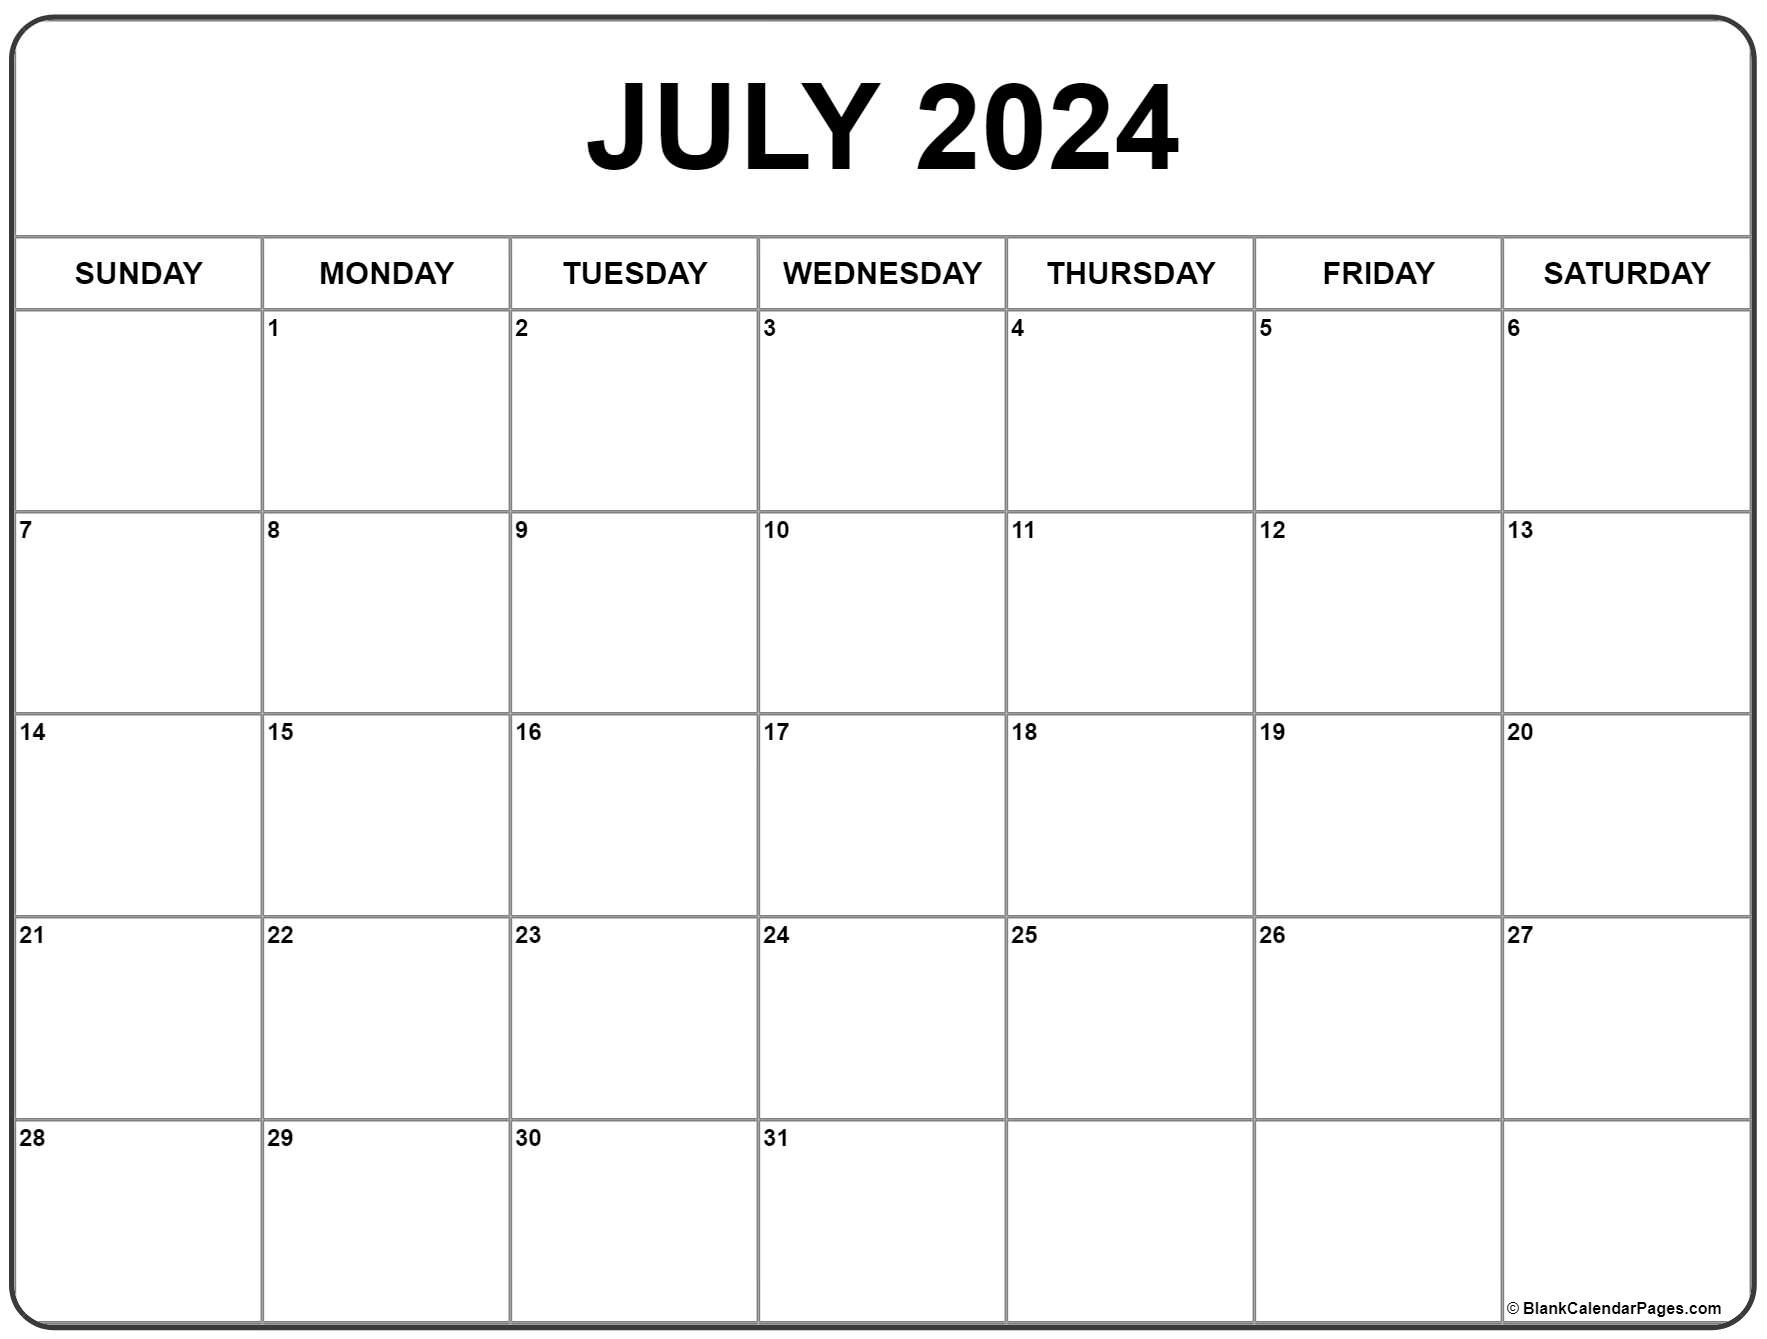 July 2024 Calendar | Free Printable Calendar for Printable Calendar For July 2024